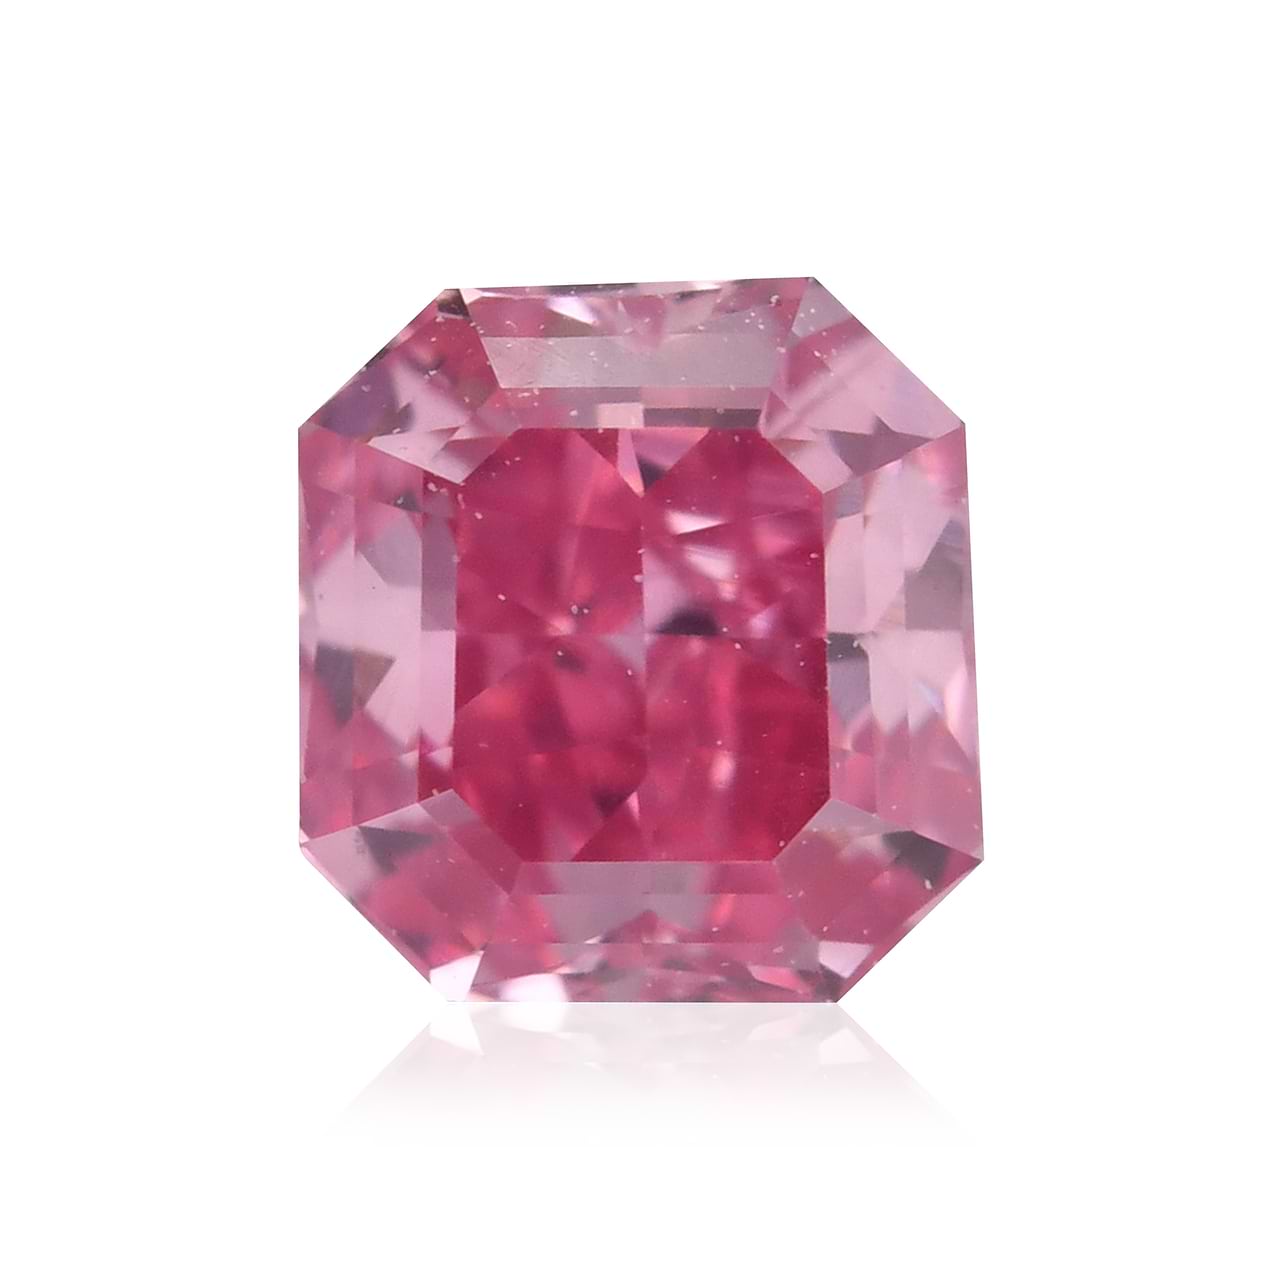 0.26 carat, Fancy Vivid Purplish Pink Diamond, Radiant Shape, VVS1 